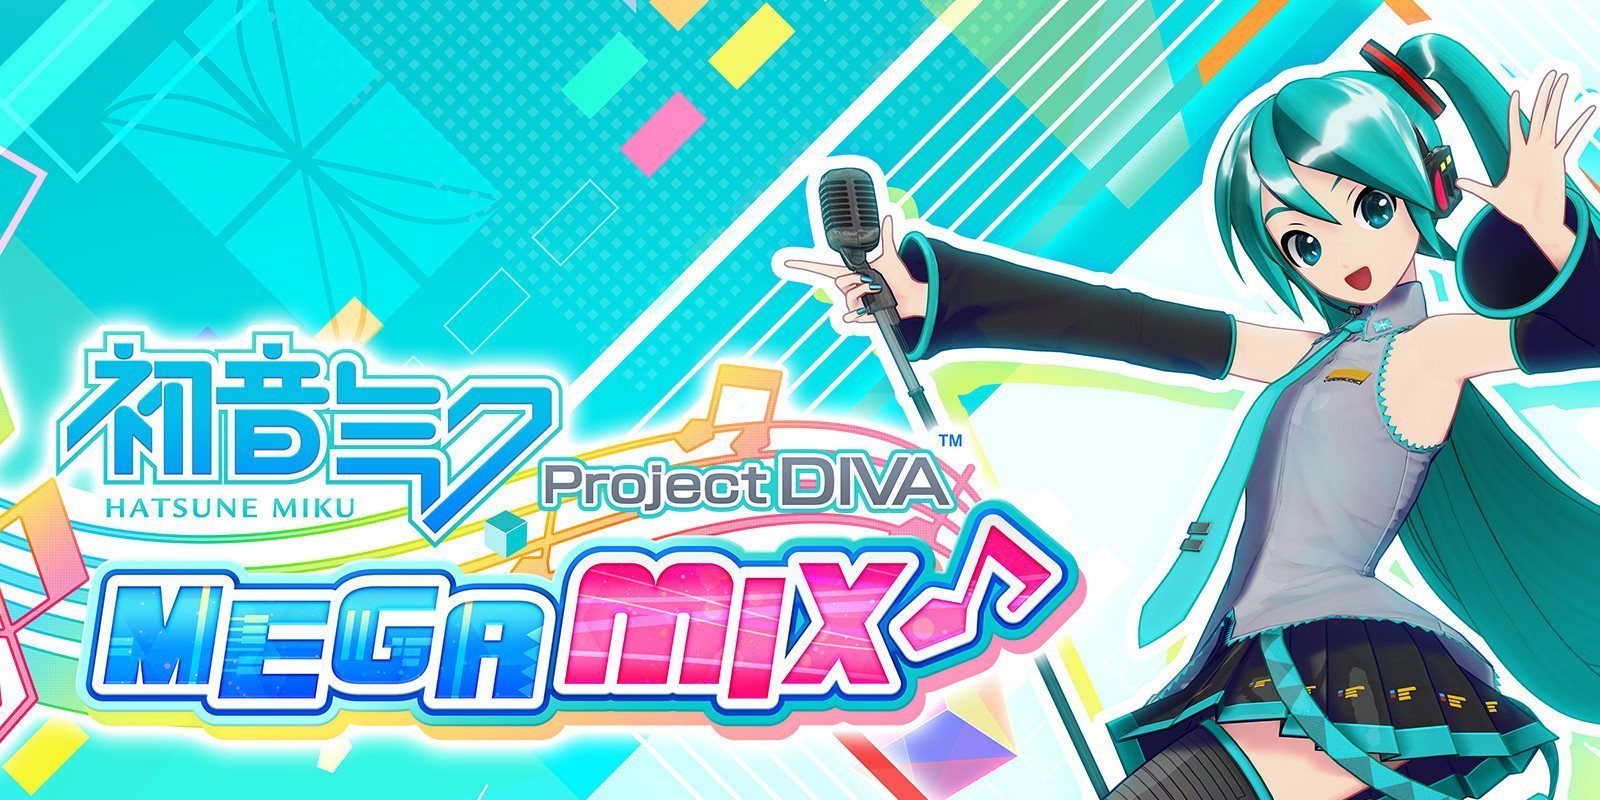 Análisis de 'Hatsune Miku Project DIVA Mega Mix' para Nintendo Switch, luces y ritmo